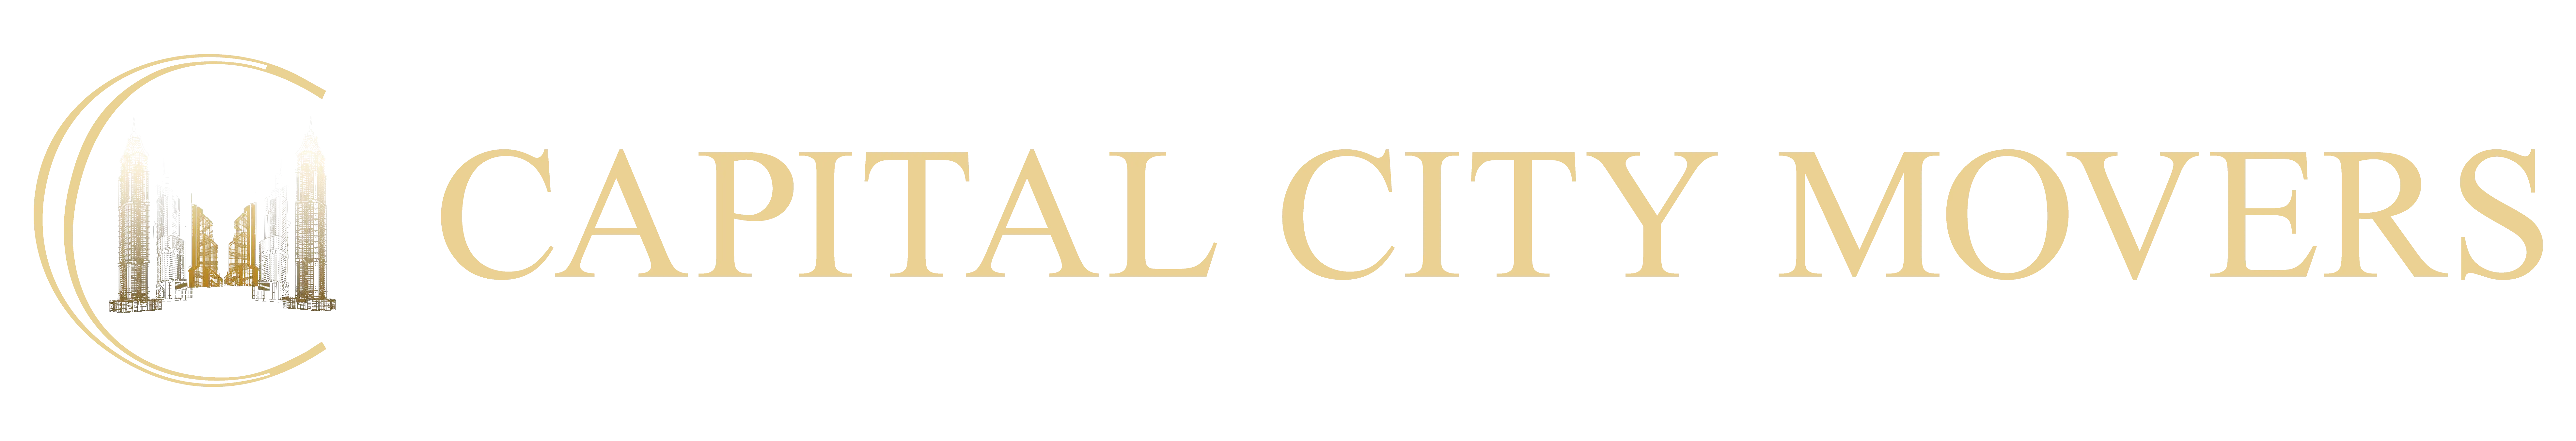 Capital City Movers & Storage logo